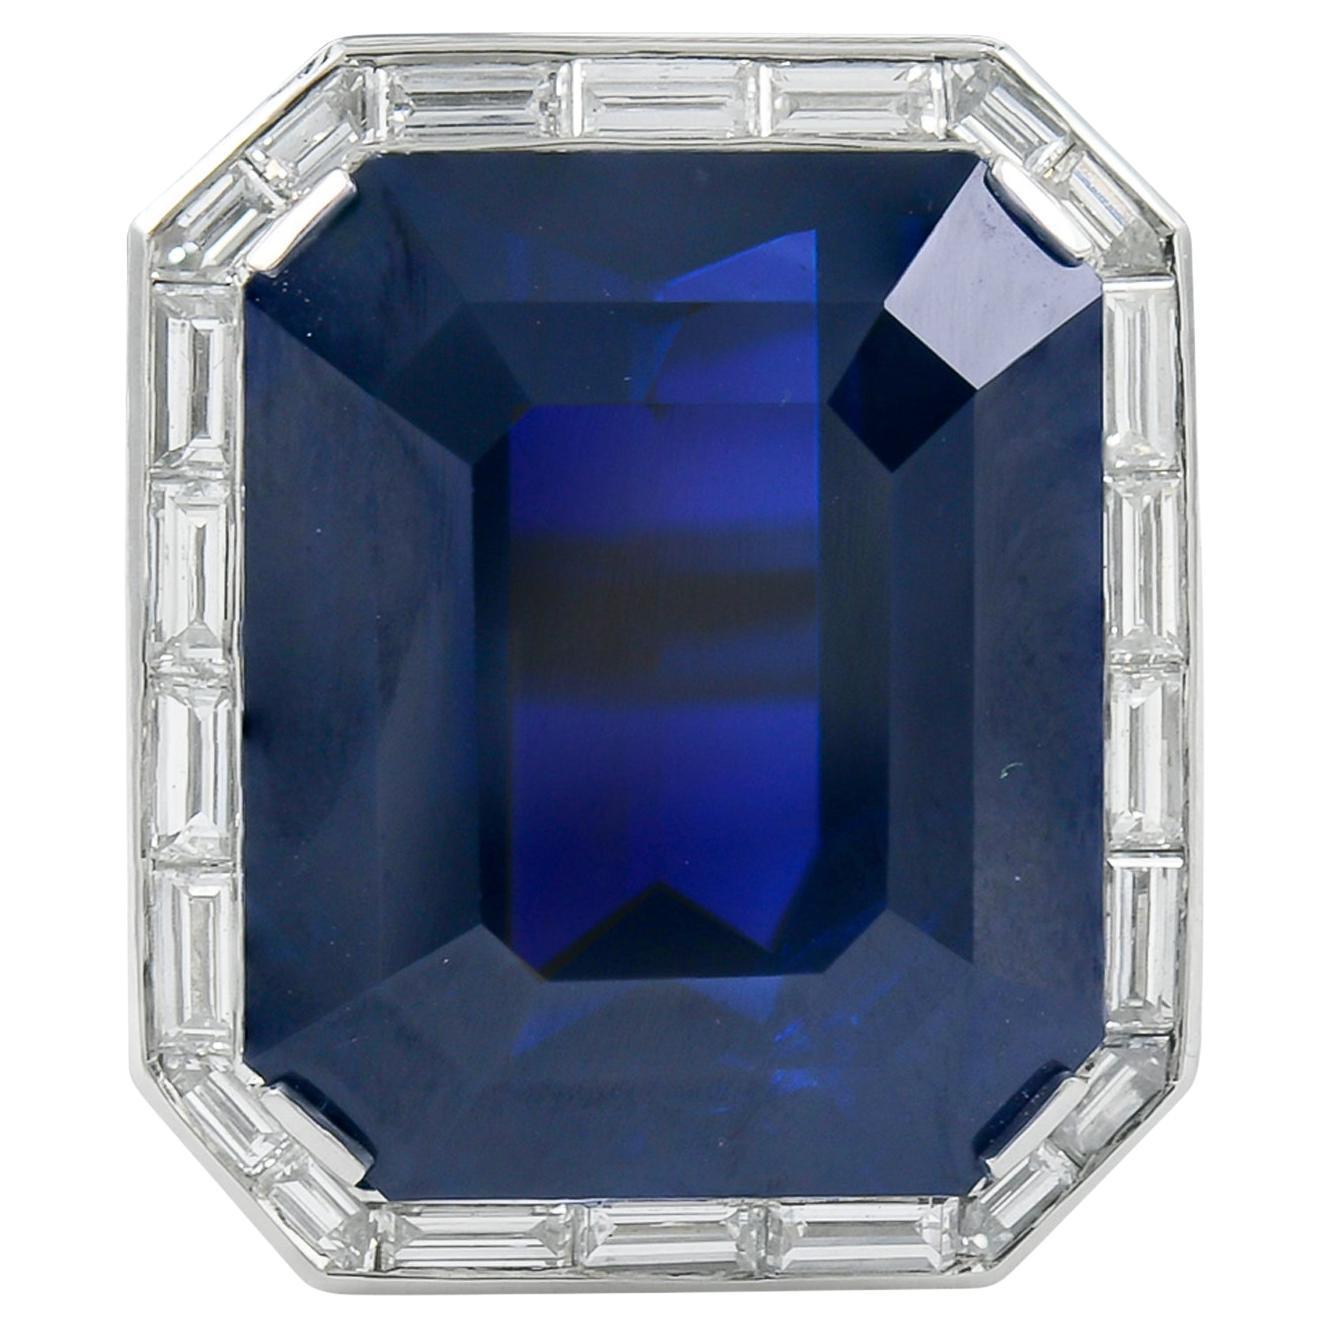 Spectra Fine Jewelry, Certified 37.13 Carat Sapphire Diamond Cocktail Ring